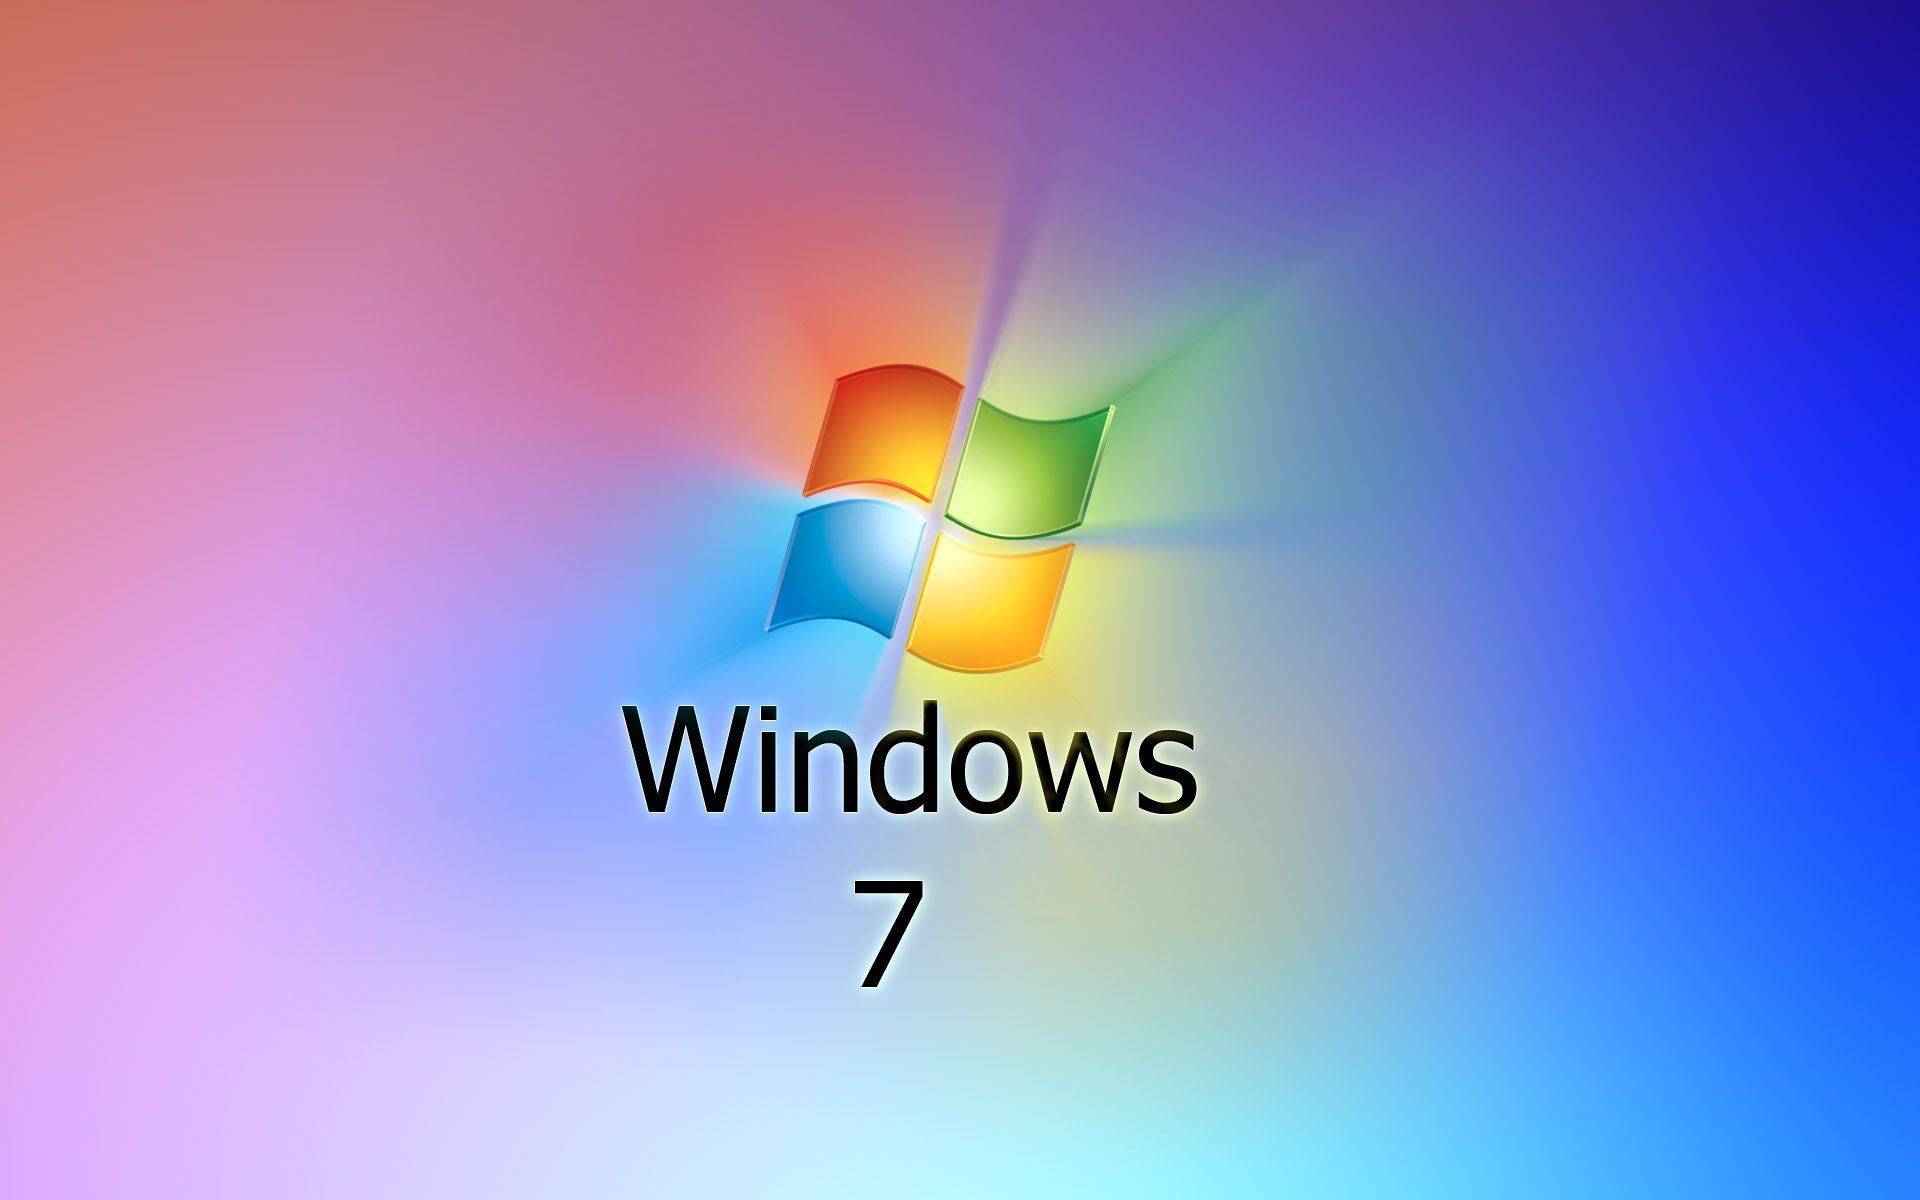 For Windows 7 Desktop